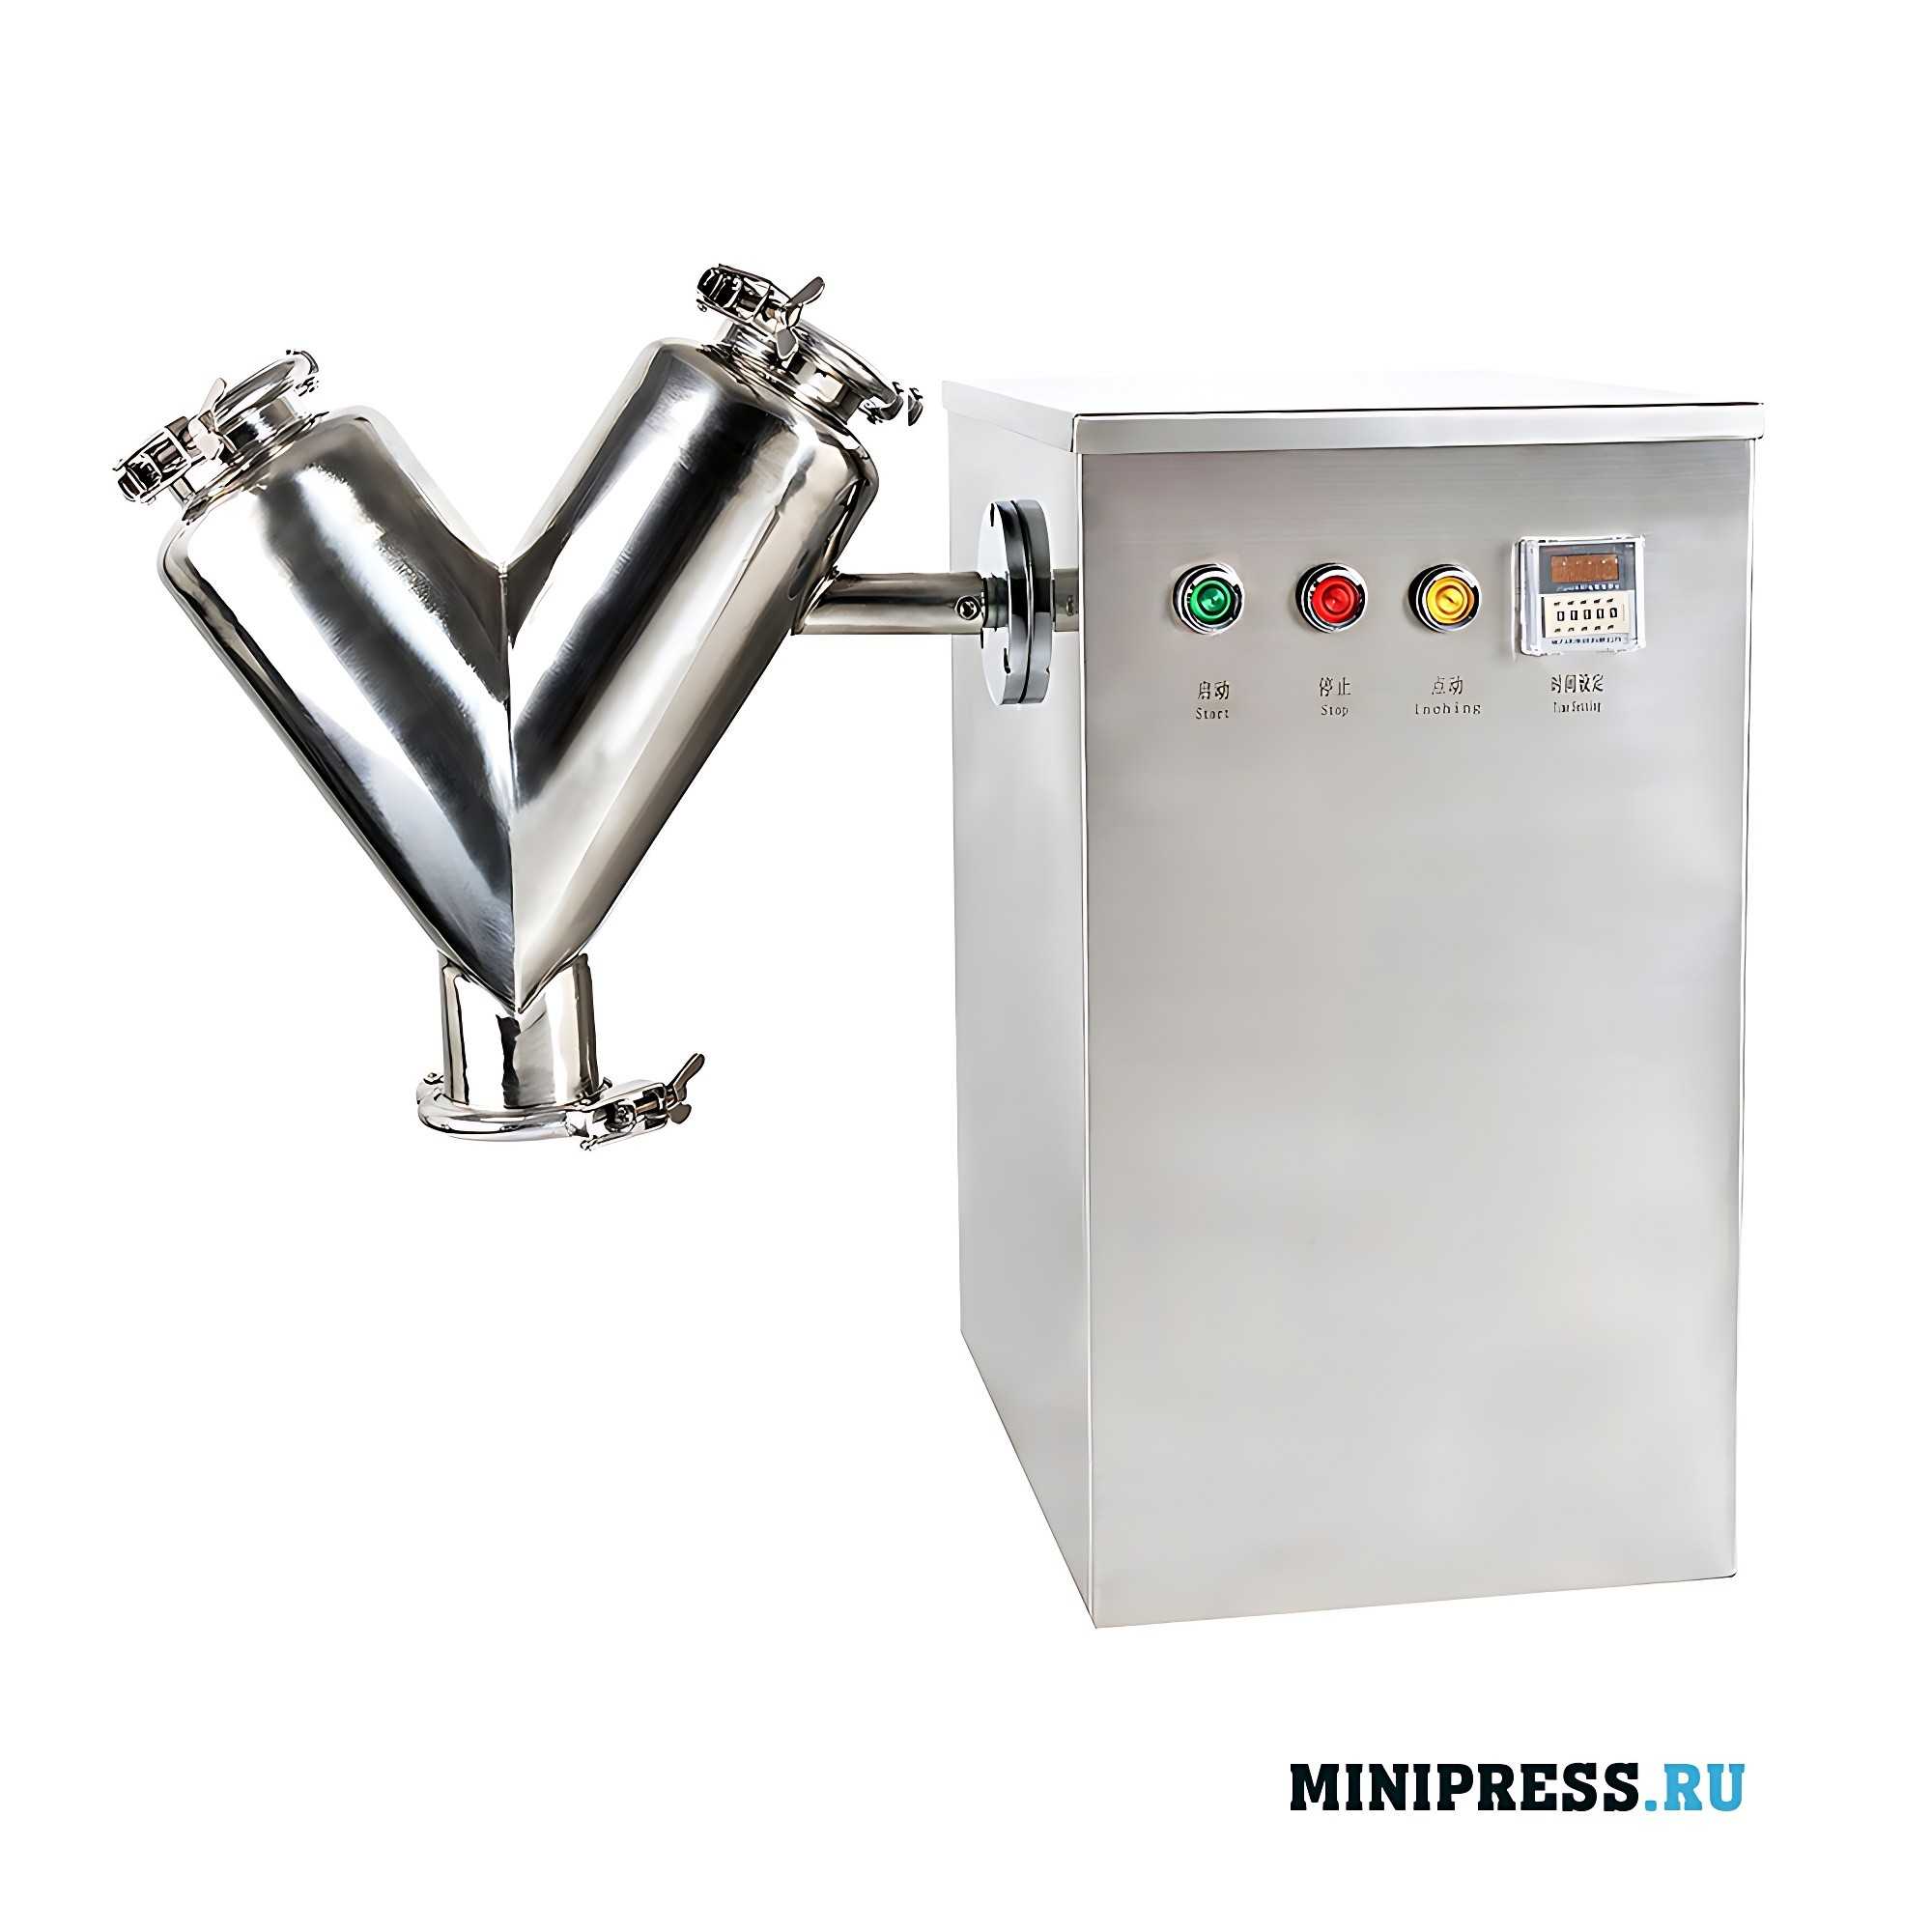 V-mixer for powders VM-10